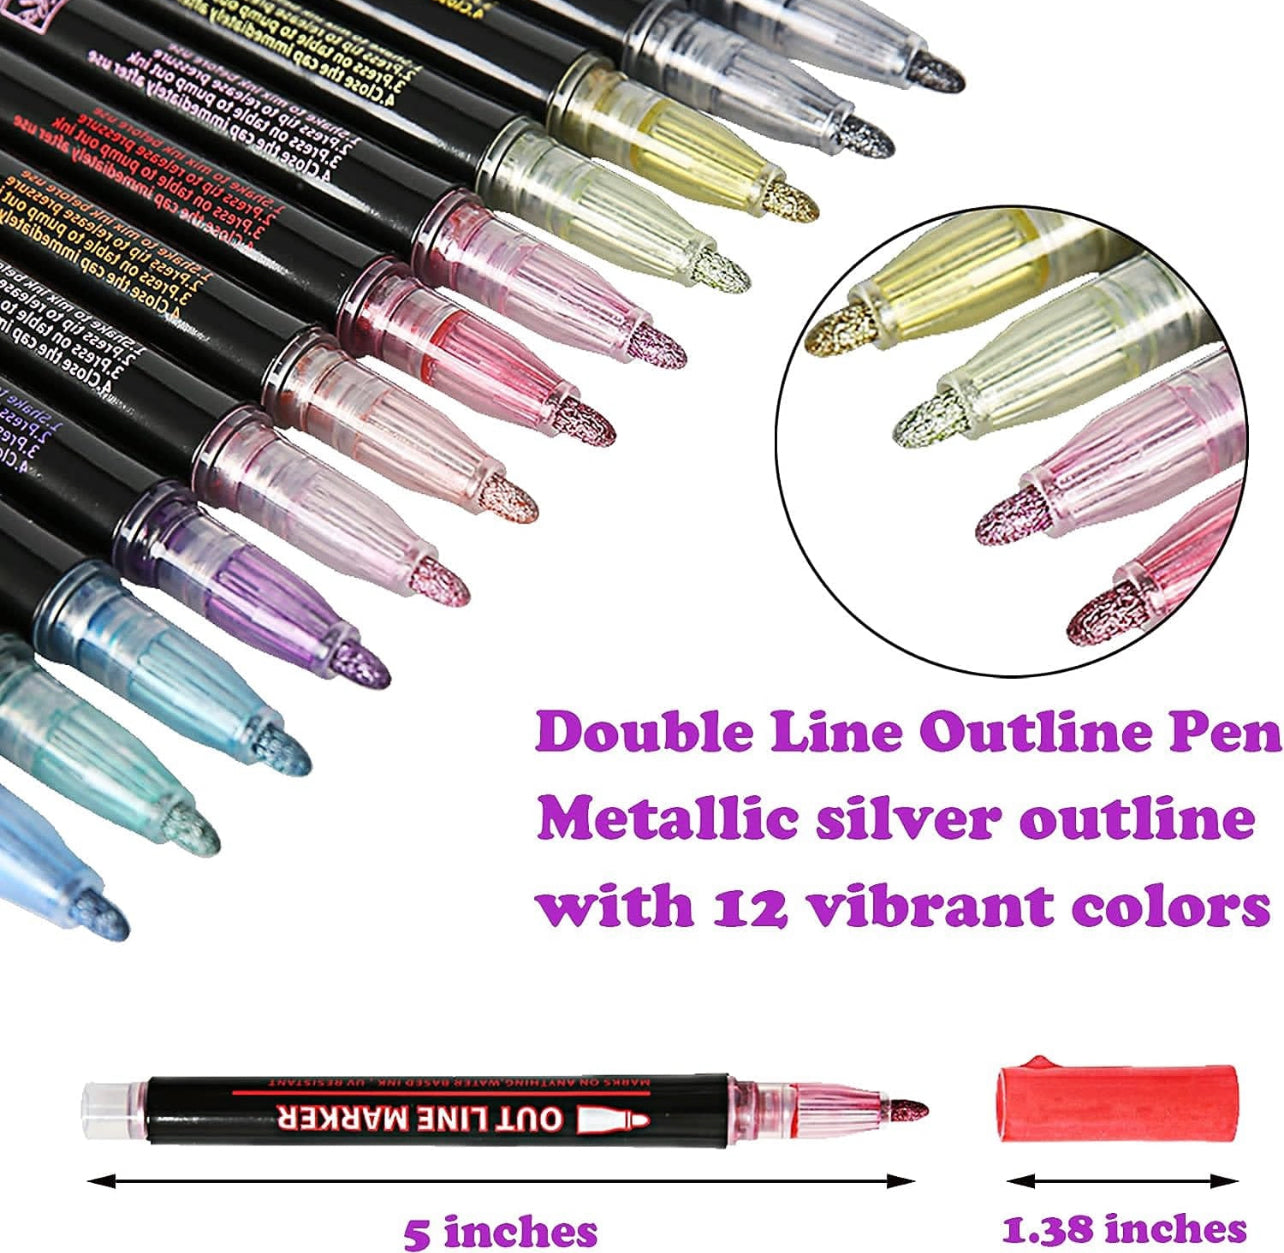 Outliner Marker Pens - 12pcs – Viaana Kids Store